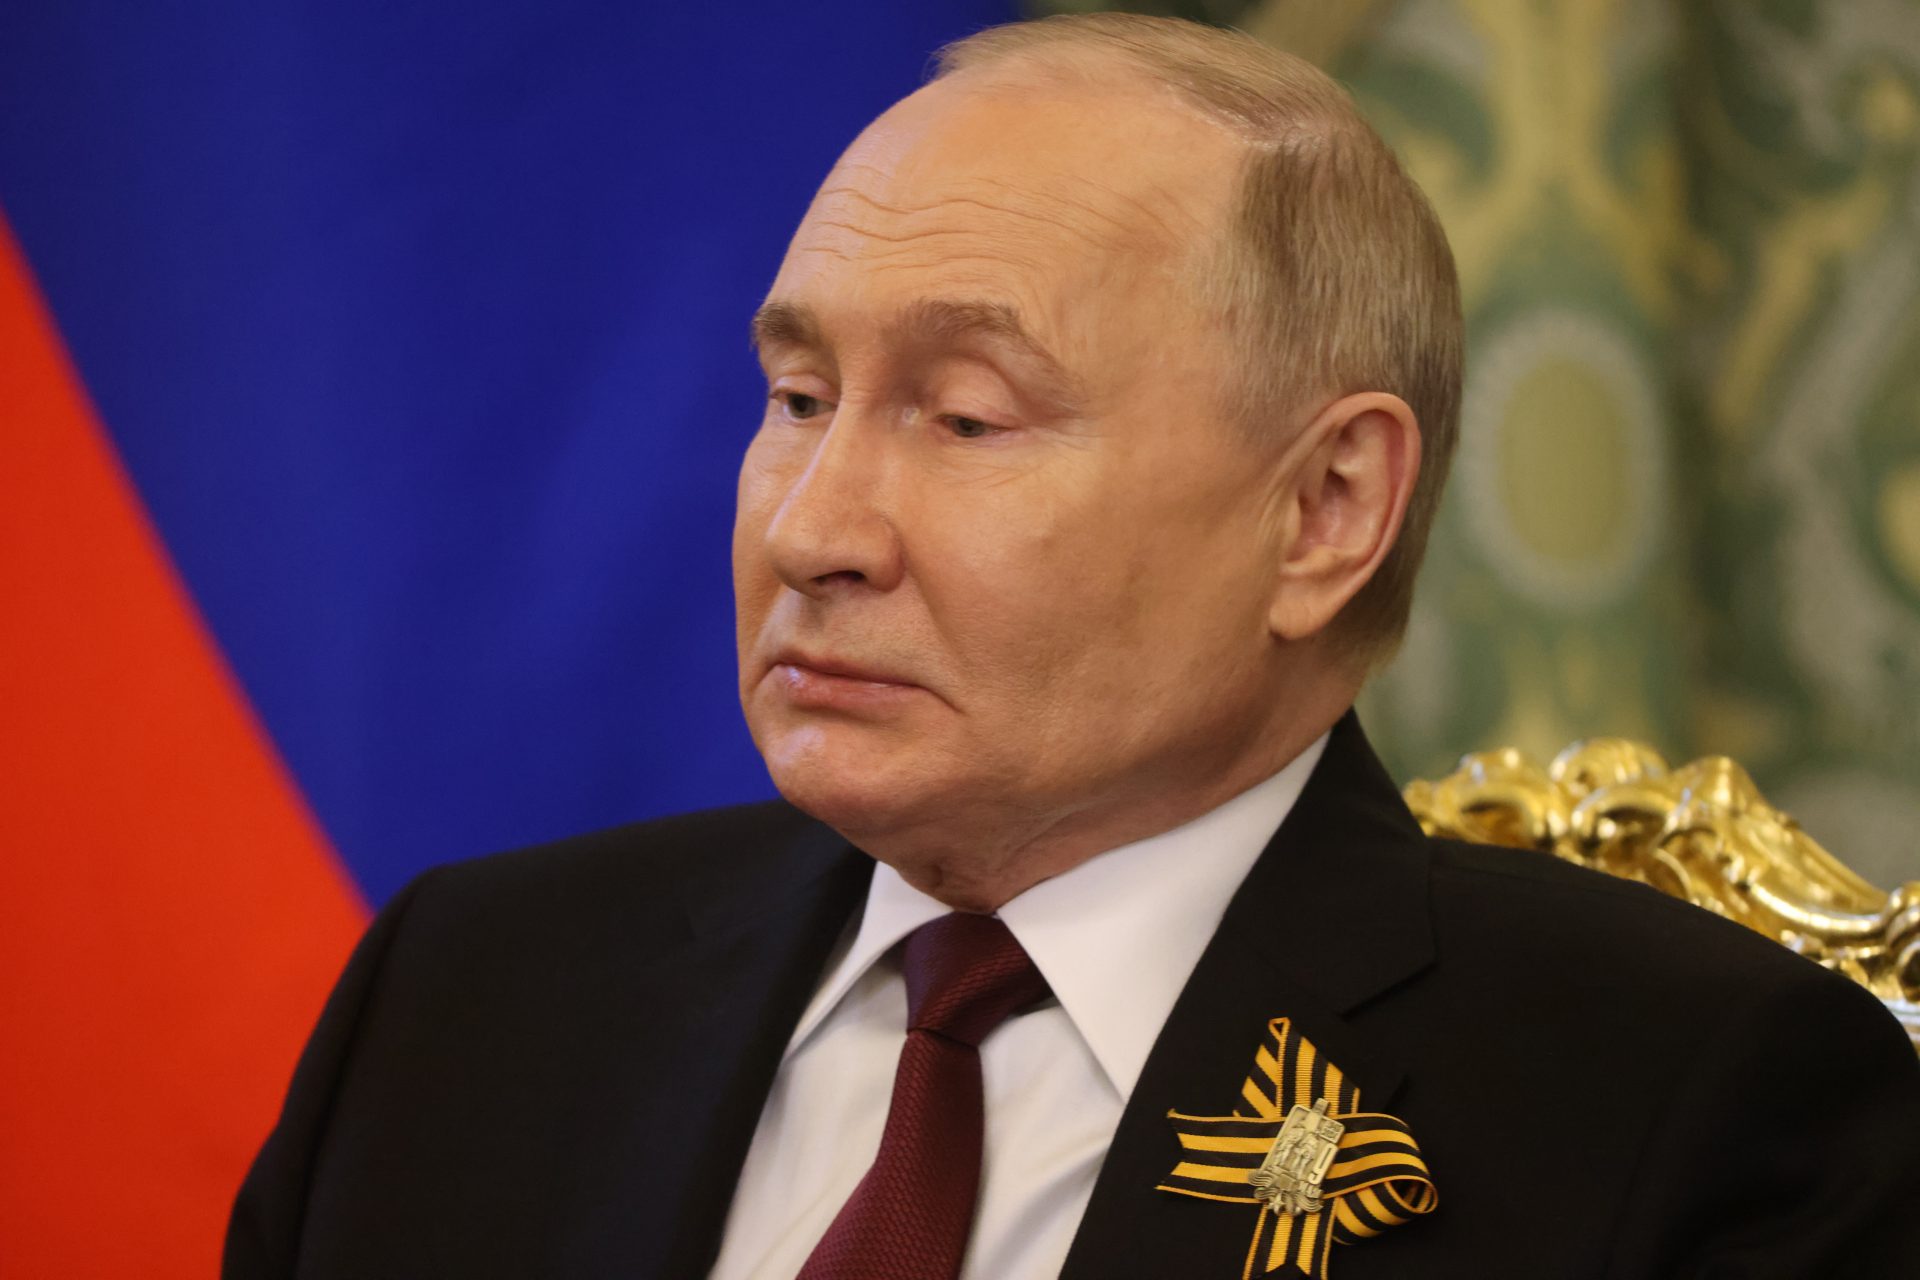 The Kremlin denies accusations 